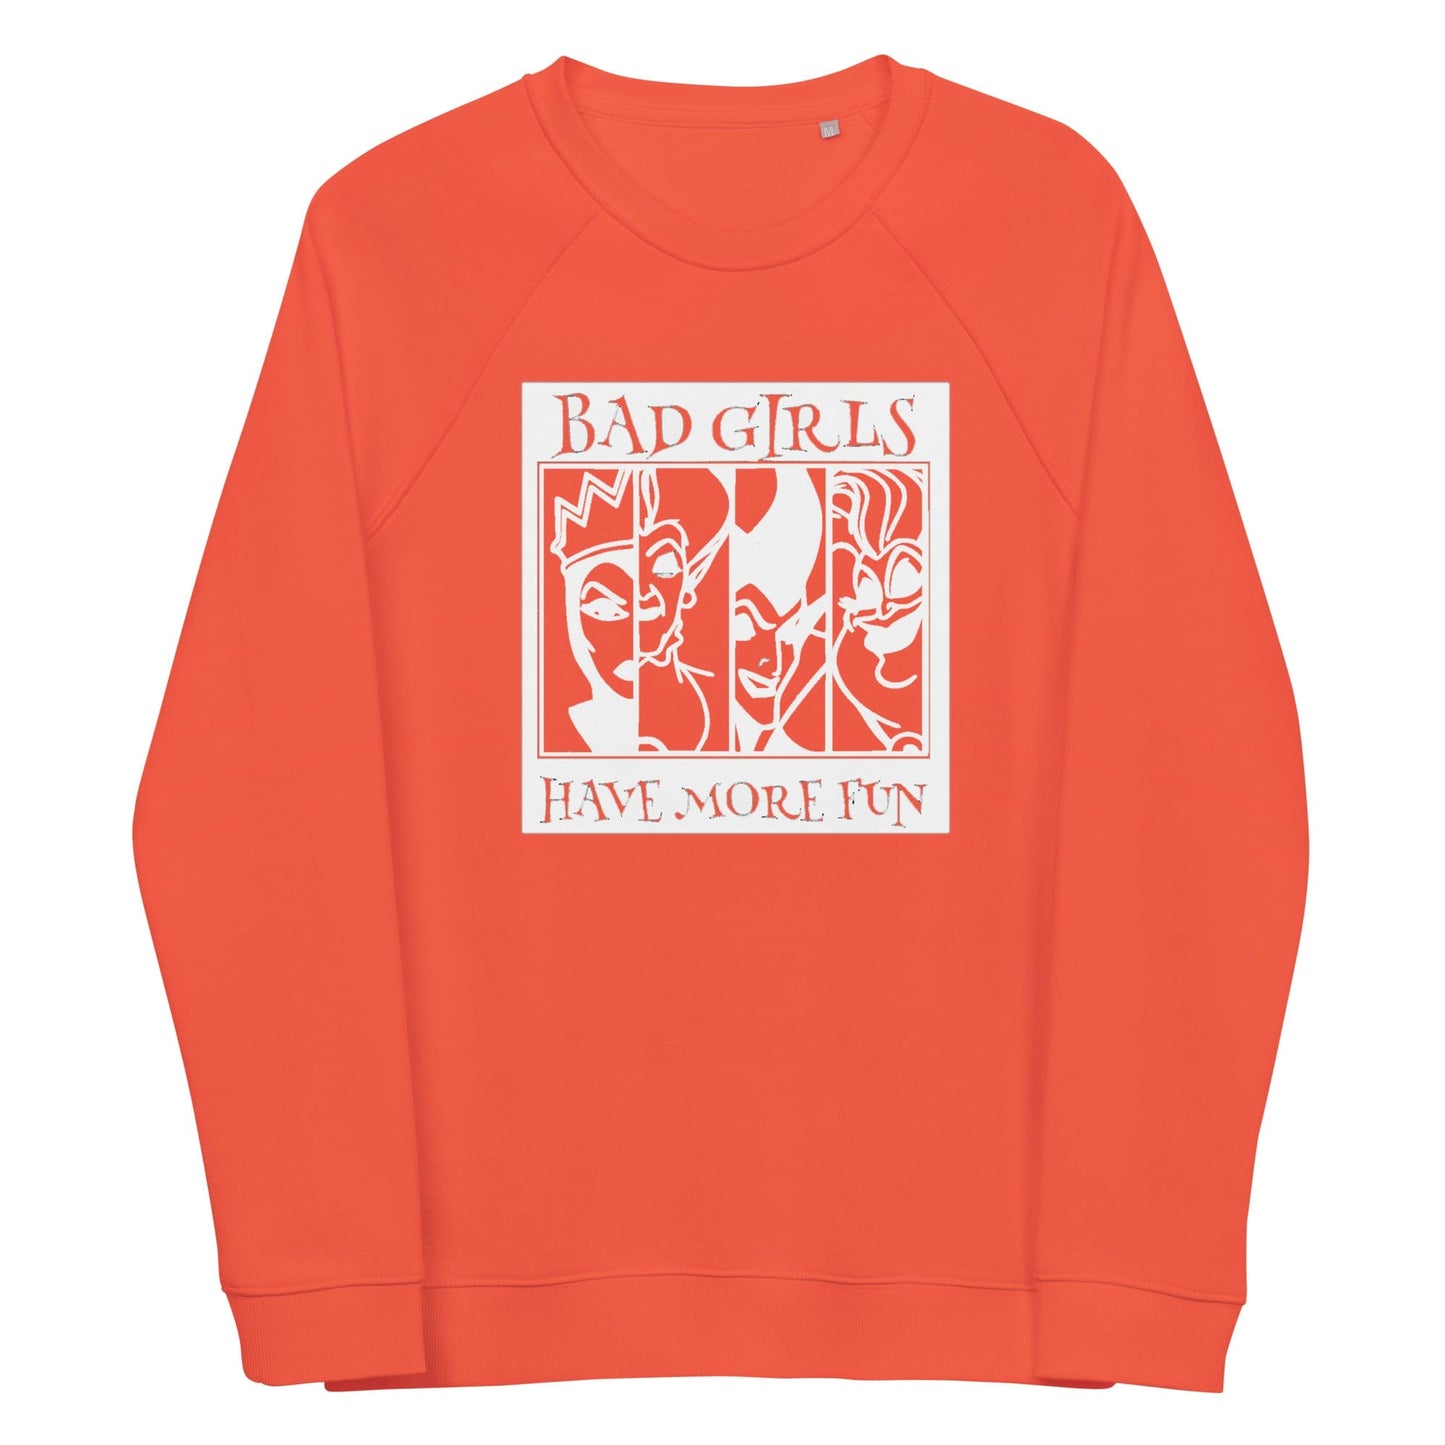 InsensitiviTees Shirts S / Orange Bad Girls Have More Fun Sweatshirt